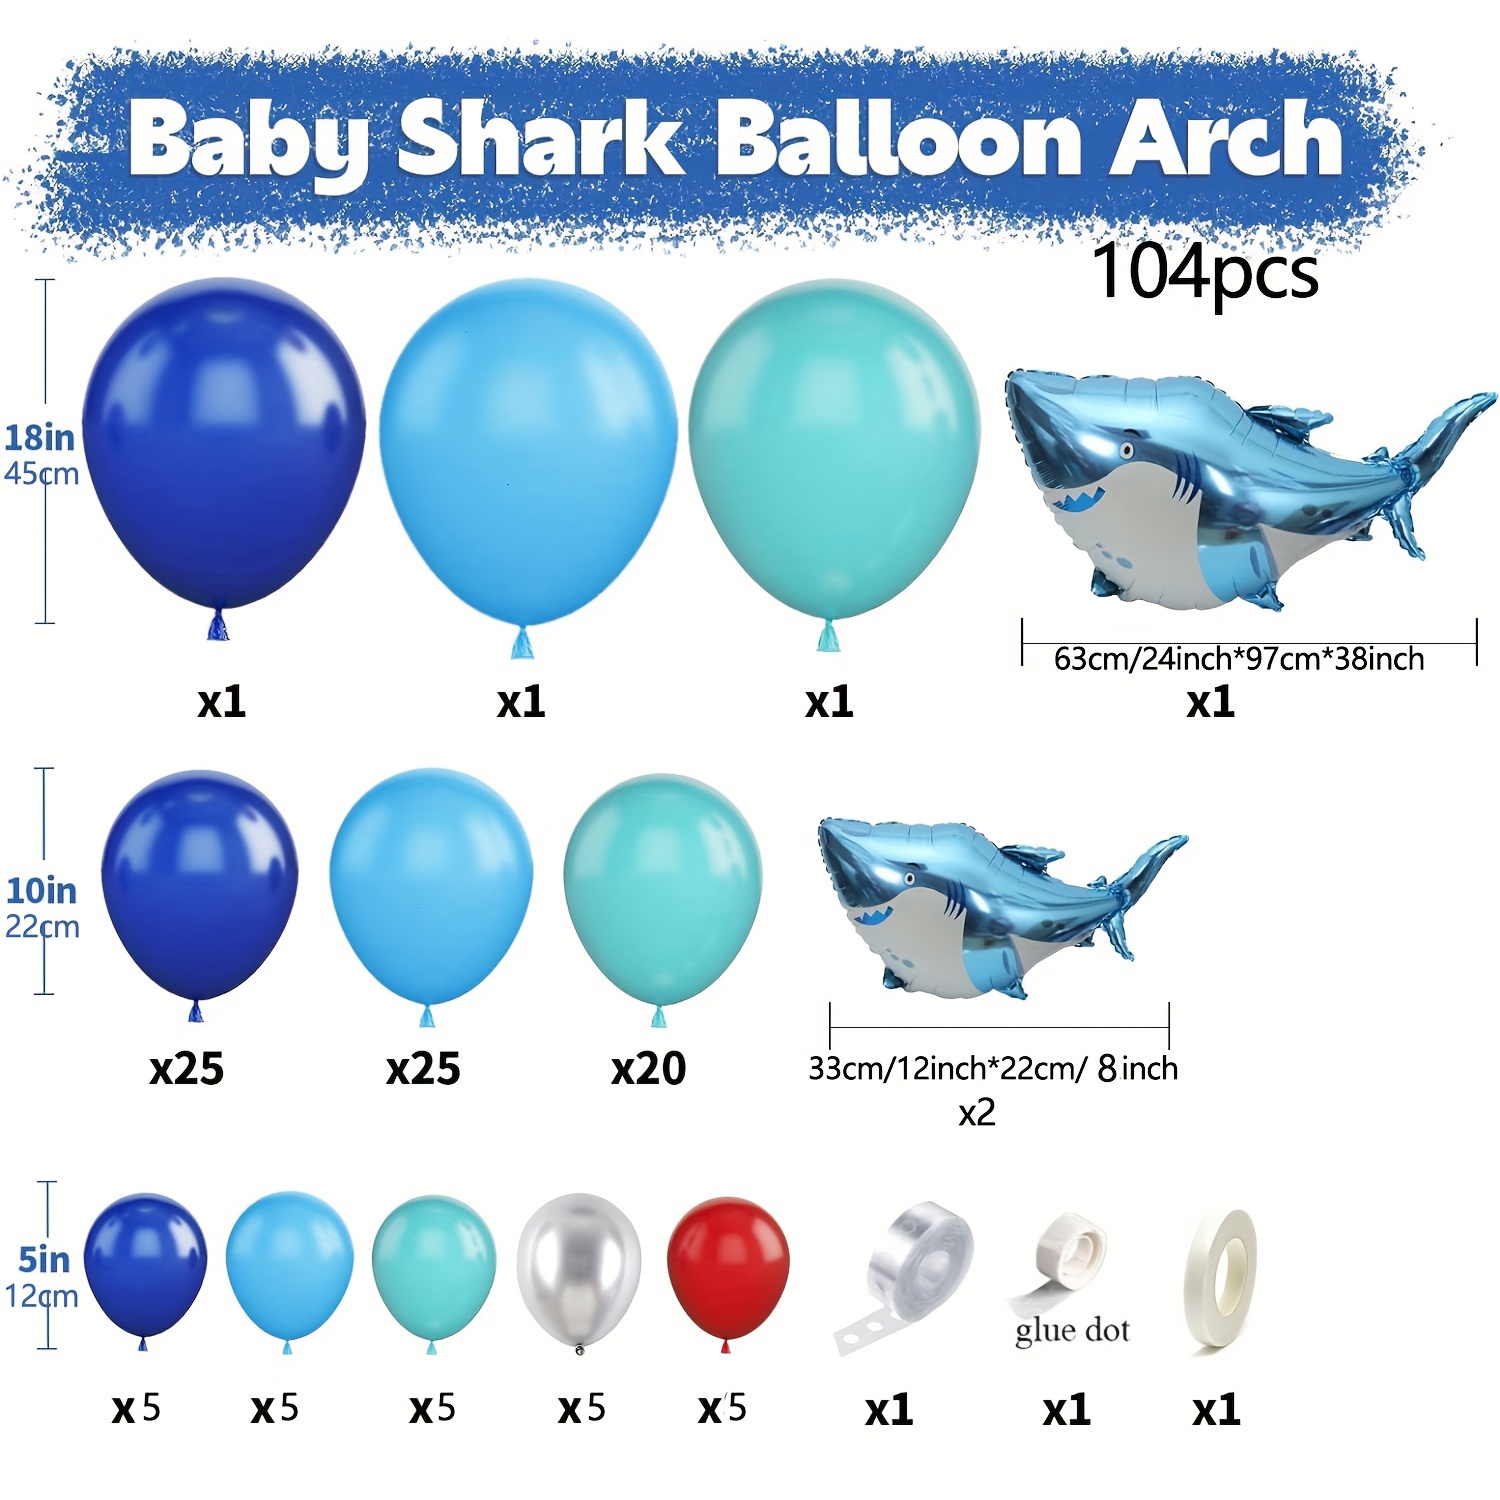 Egodeals 101pcs Under The Sea Ocean World Animal Balloons Arch Kit Shark/ Fish Balls Sea Theme Birthday Party Decoration Kids baby shower